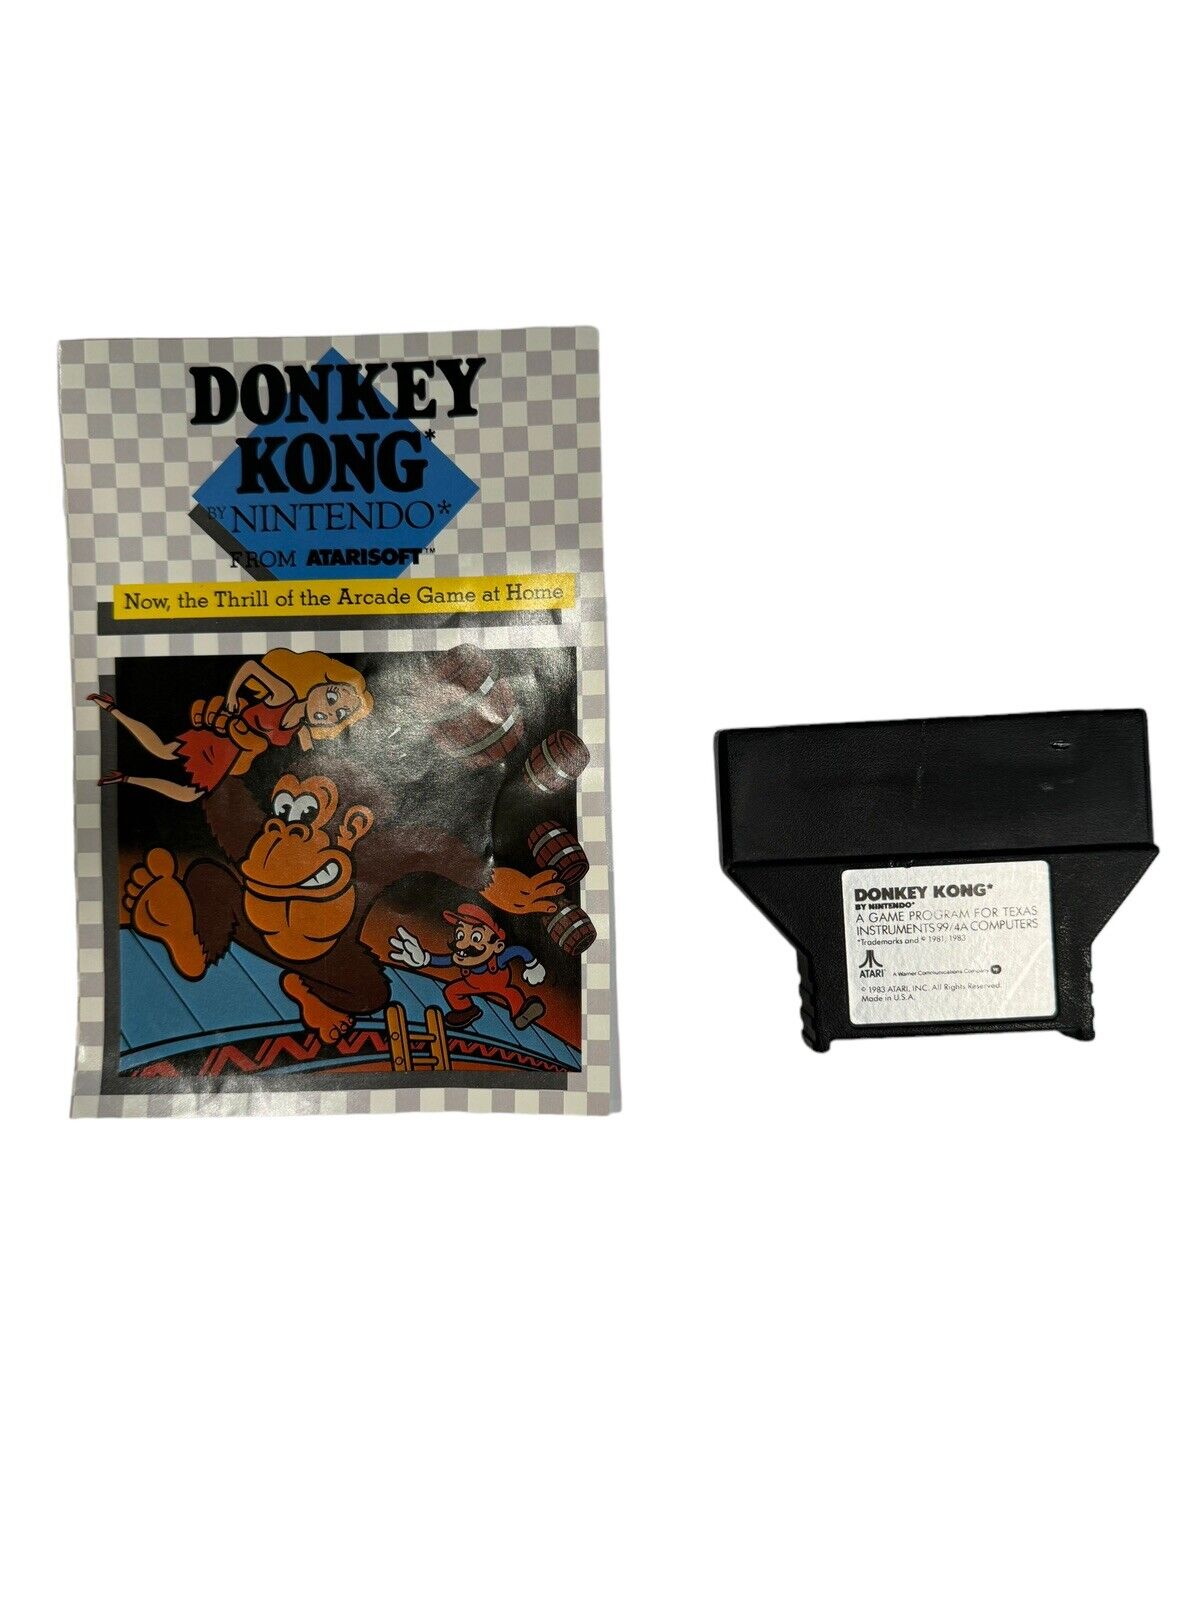 Atari DONKEY KONG Texas Instruments TI-99/4a Game W/ Manual Vintage 1983 Tested